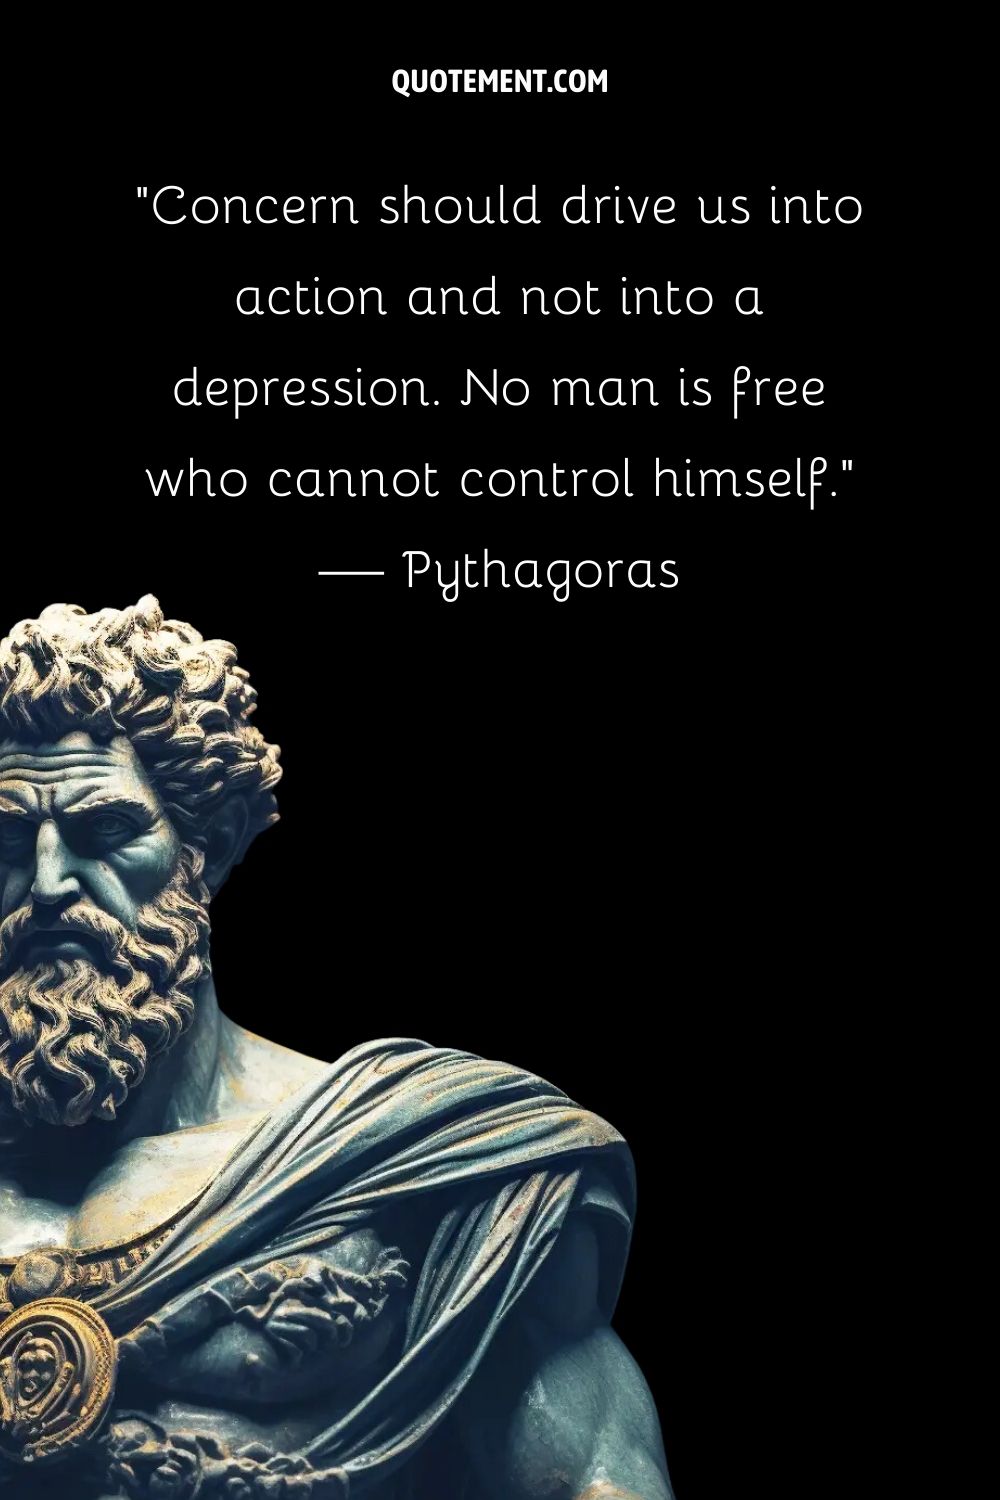 Stoic philosopher's silent wisdom engraved in stone.